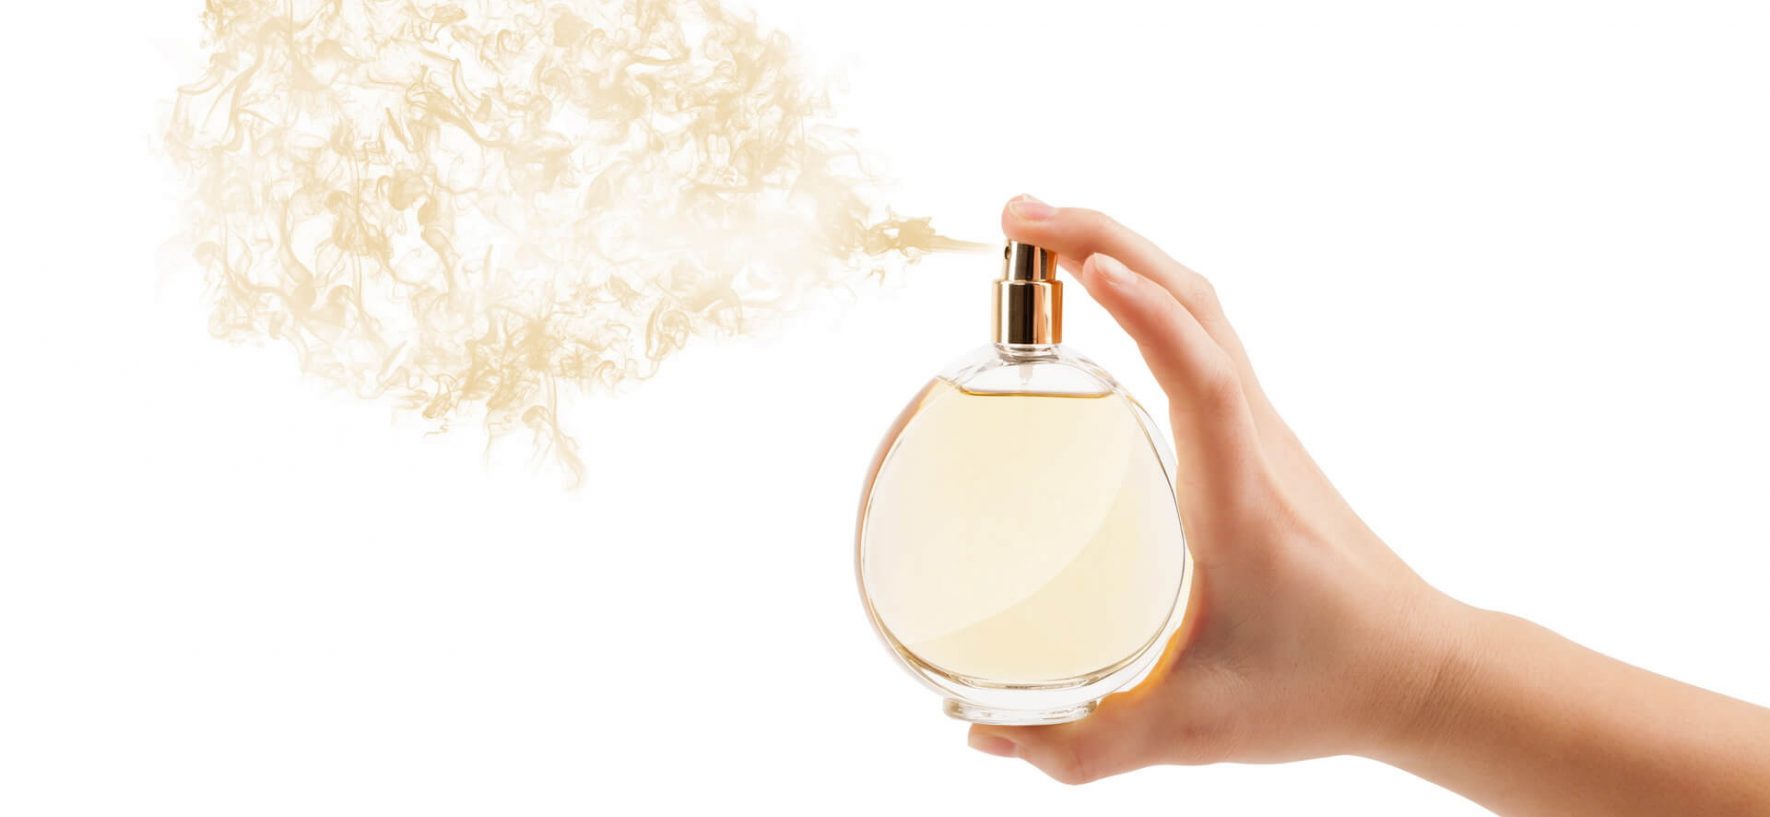 How to Improve Sense of Smell